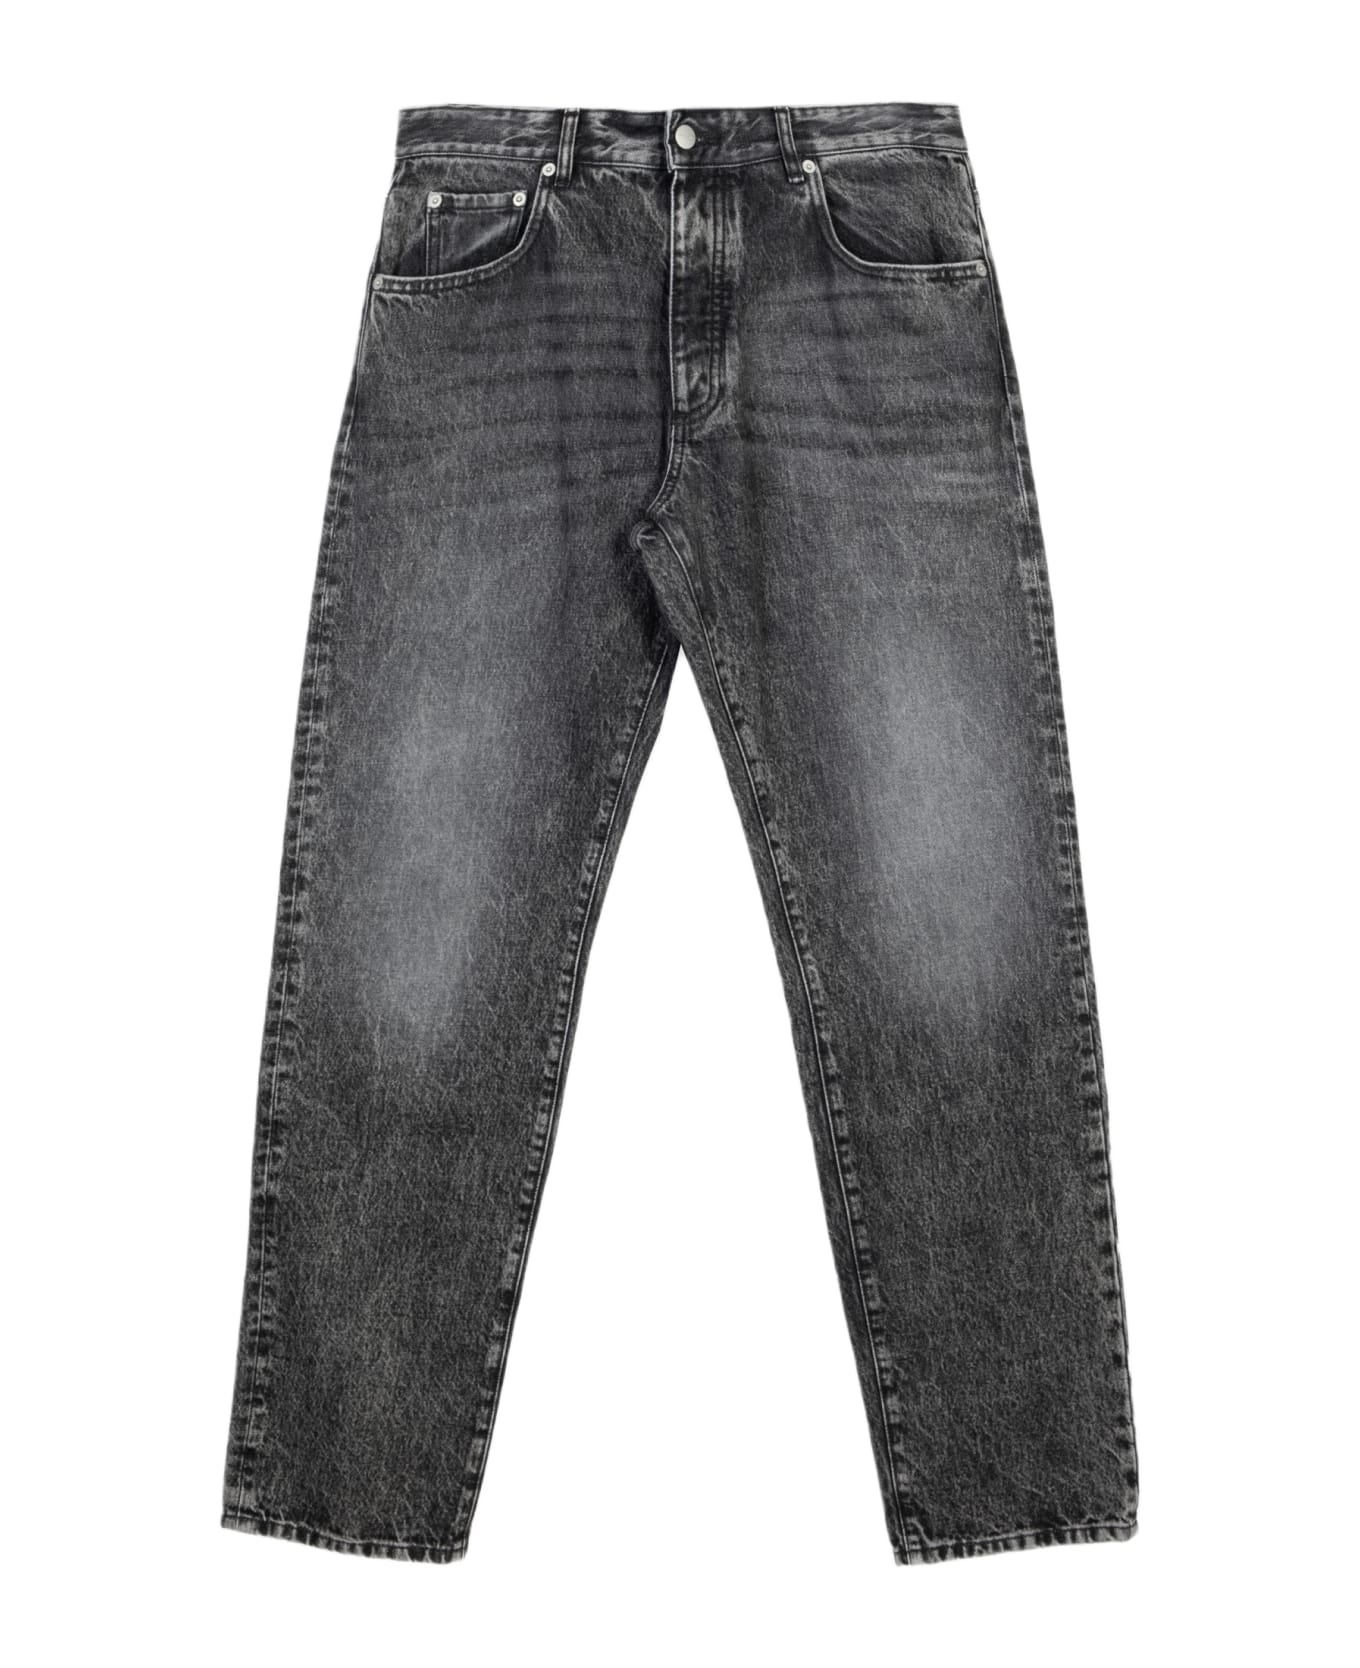 Icon Denim Man Jeans Five pockets faded black jeans - Kanye - Denim nero